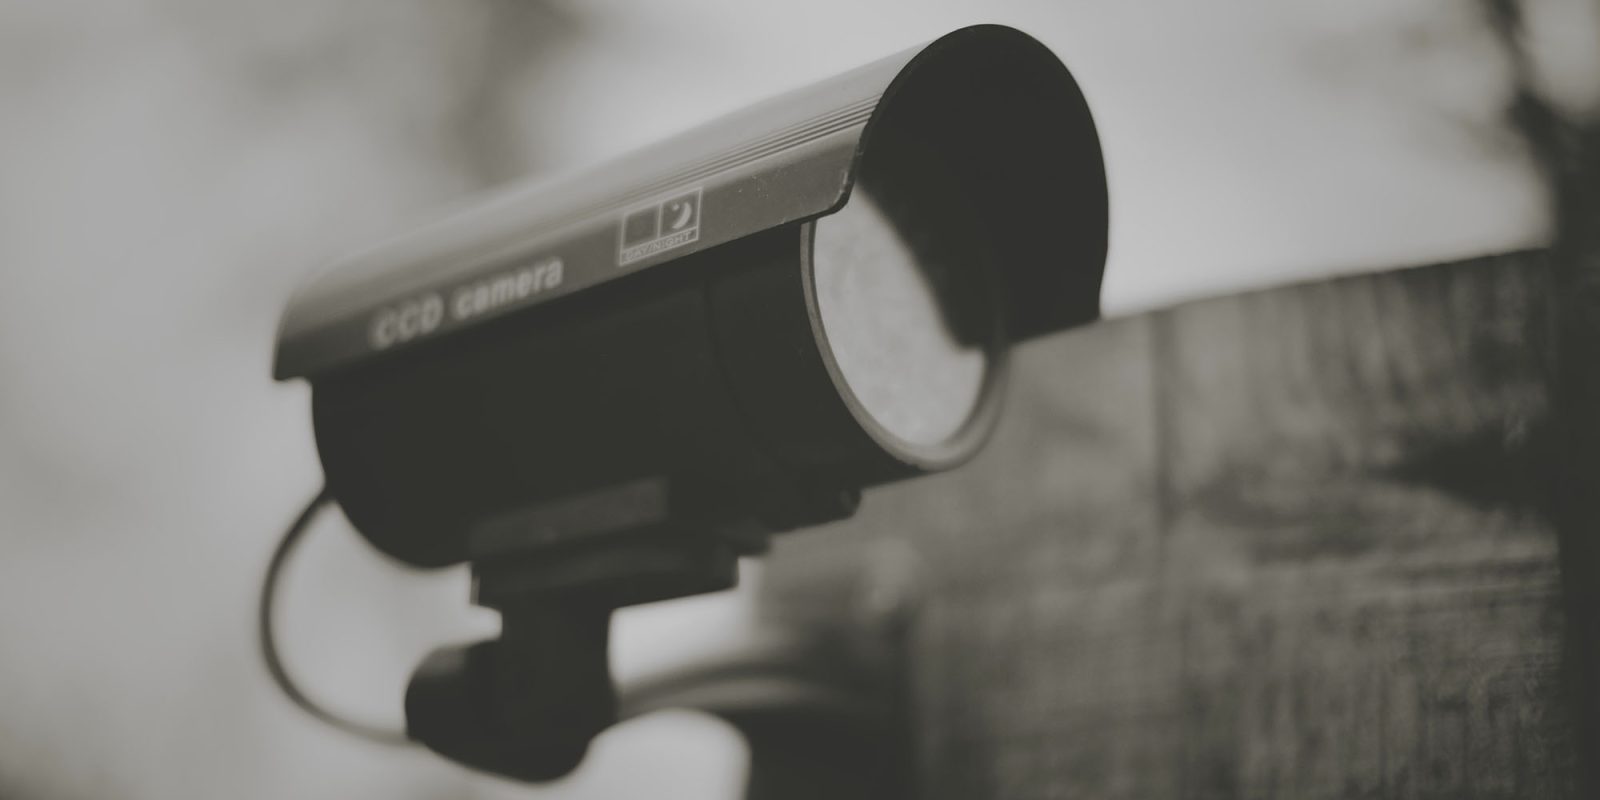 UK surveillance powers | CCTV camera